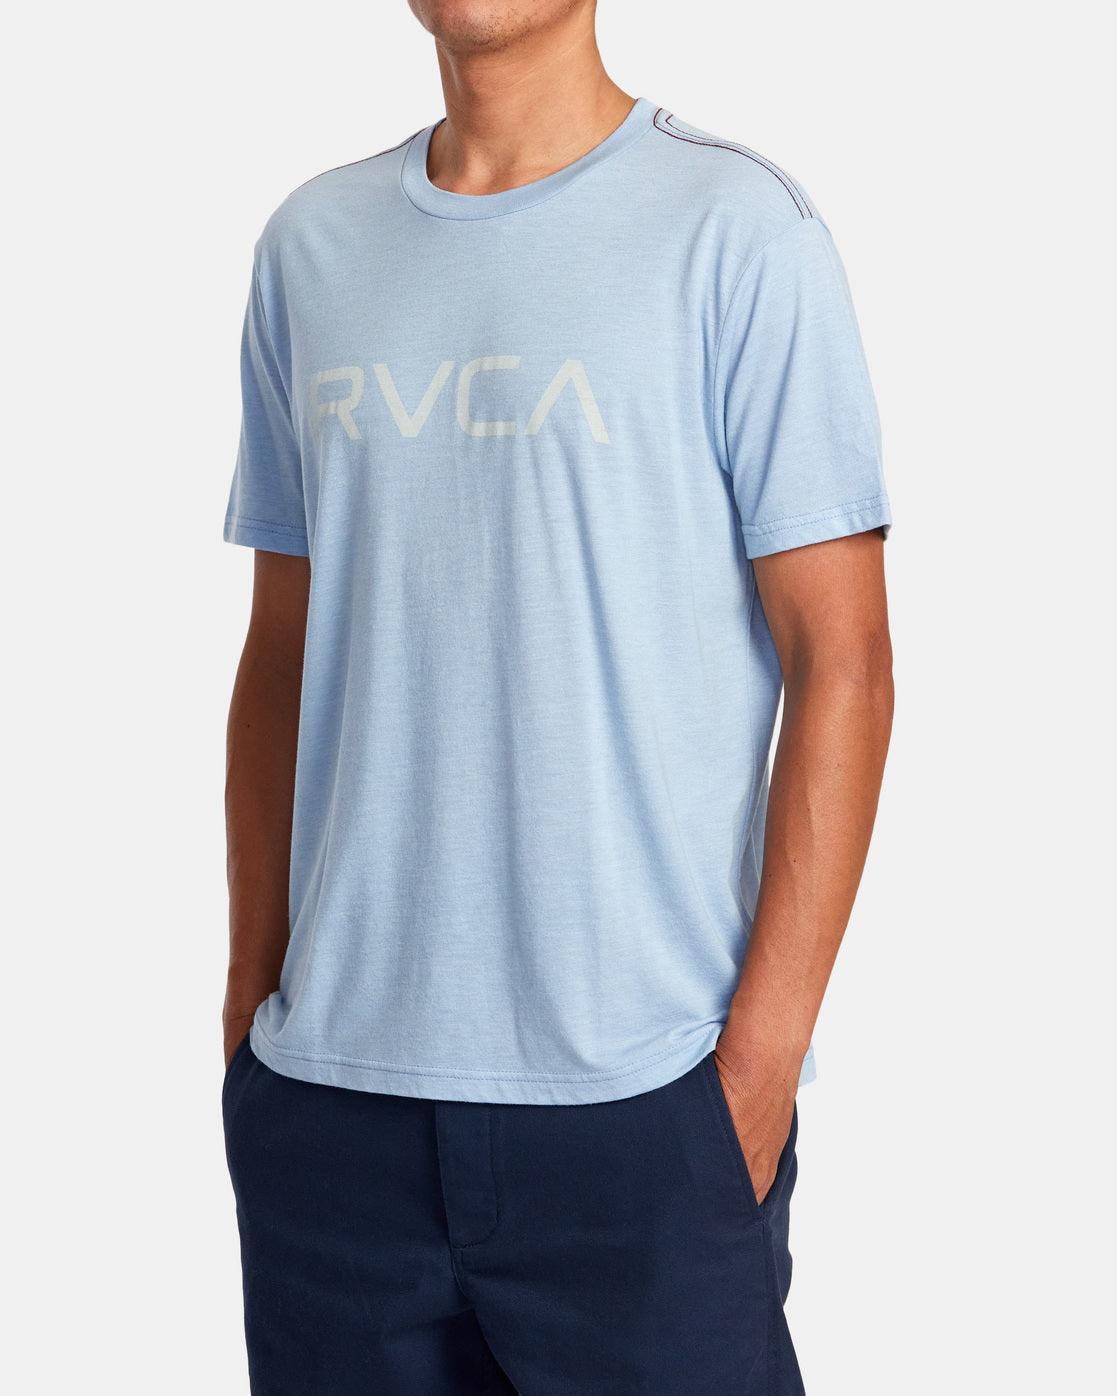 RVCA Men's Big Baseball T-Shirt, Athletic/Red, Small 